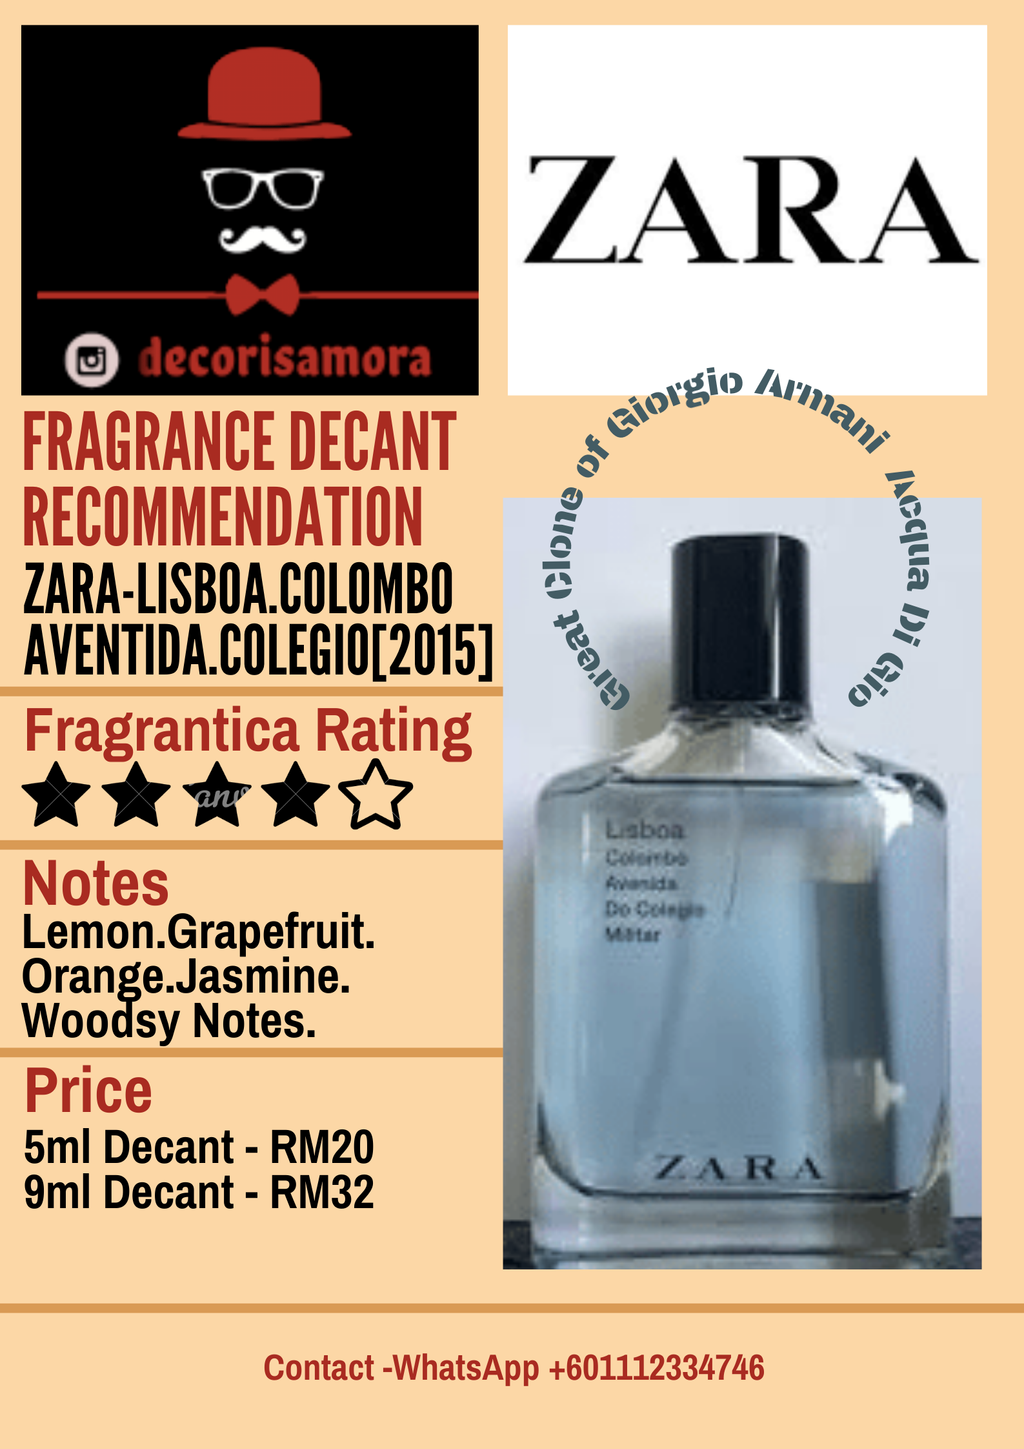 Zara Lisboa - Perfume Decant – Decoris Amora Perfume Decant